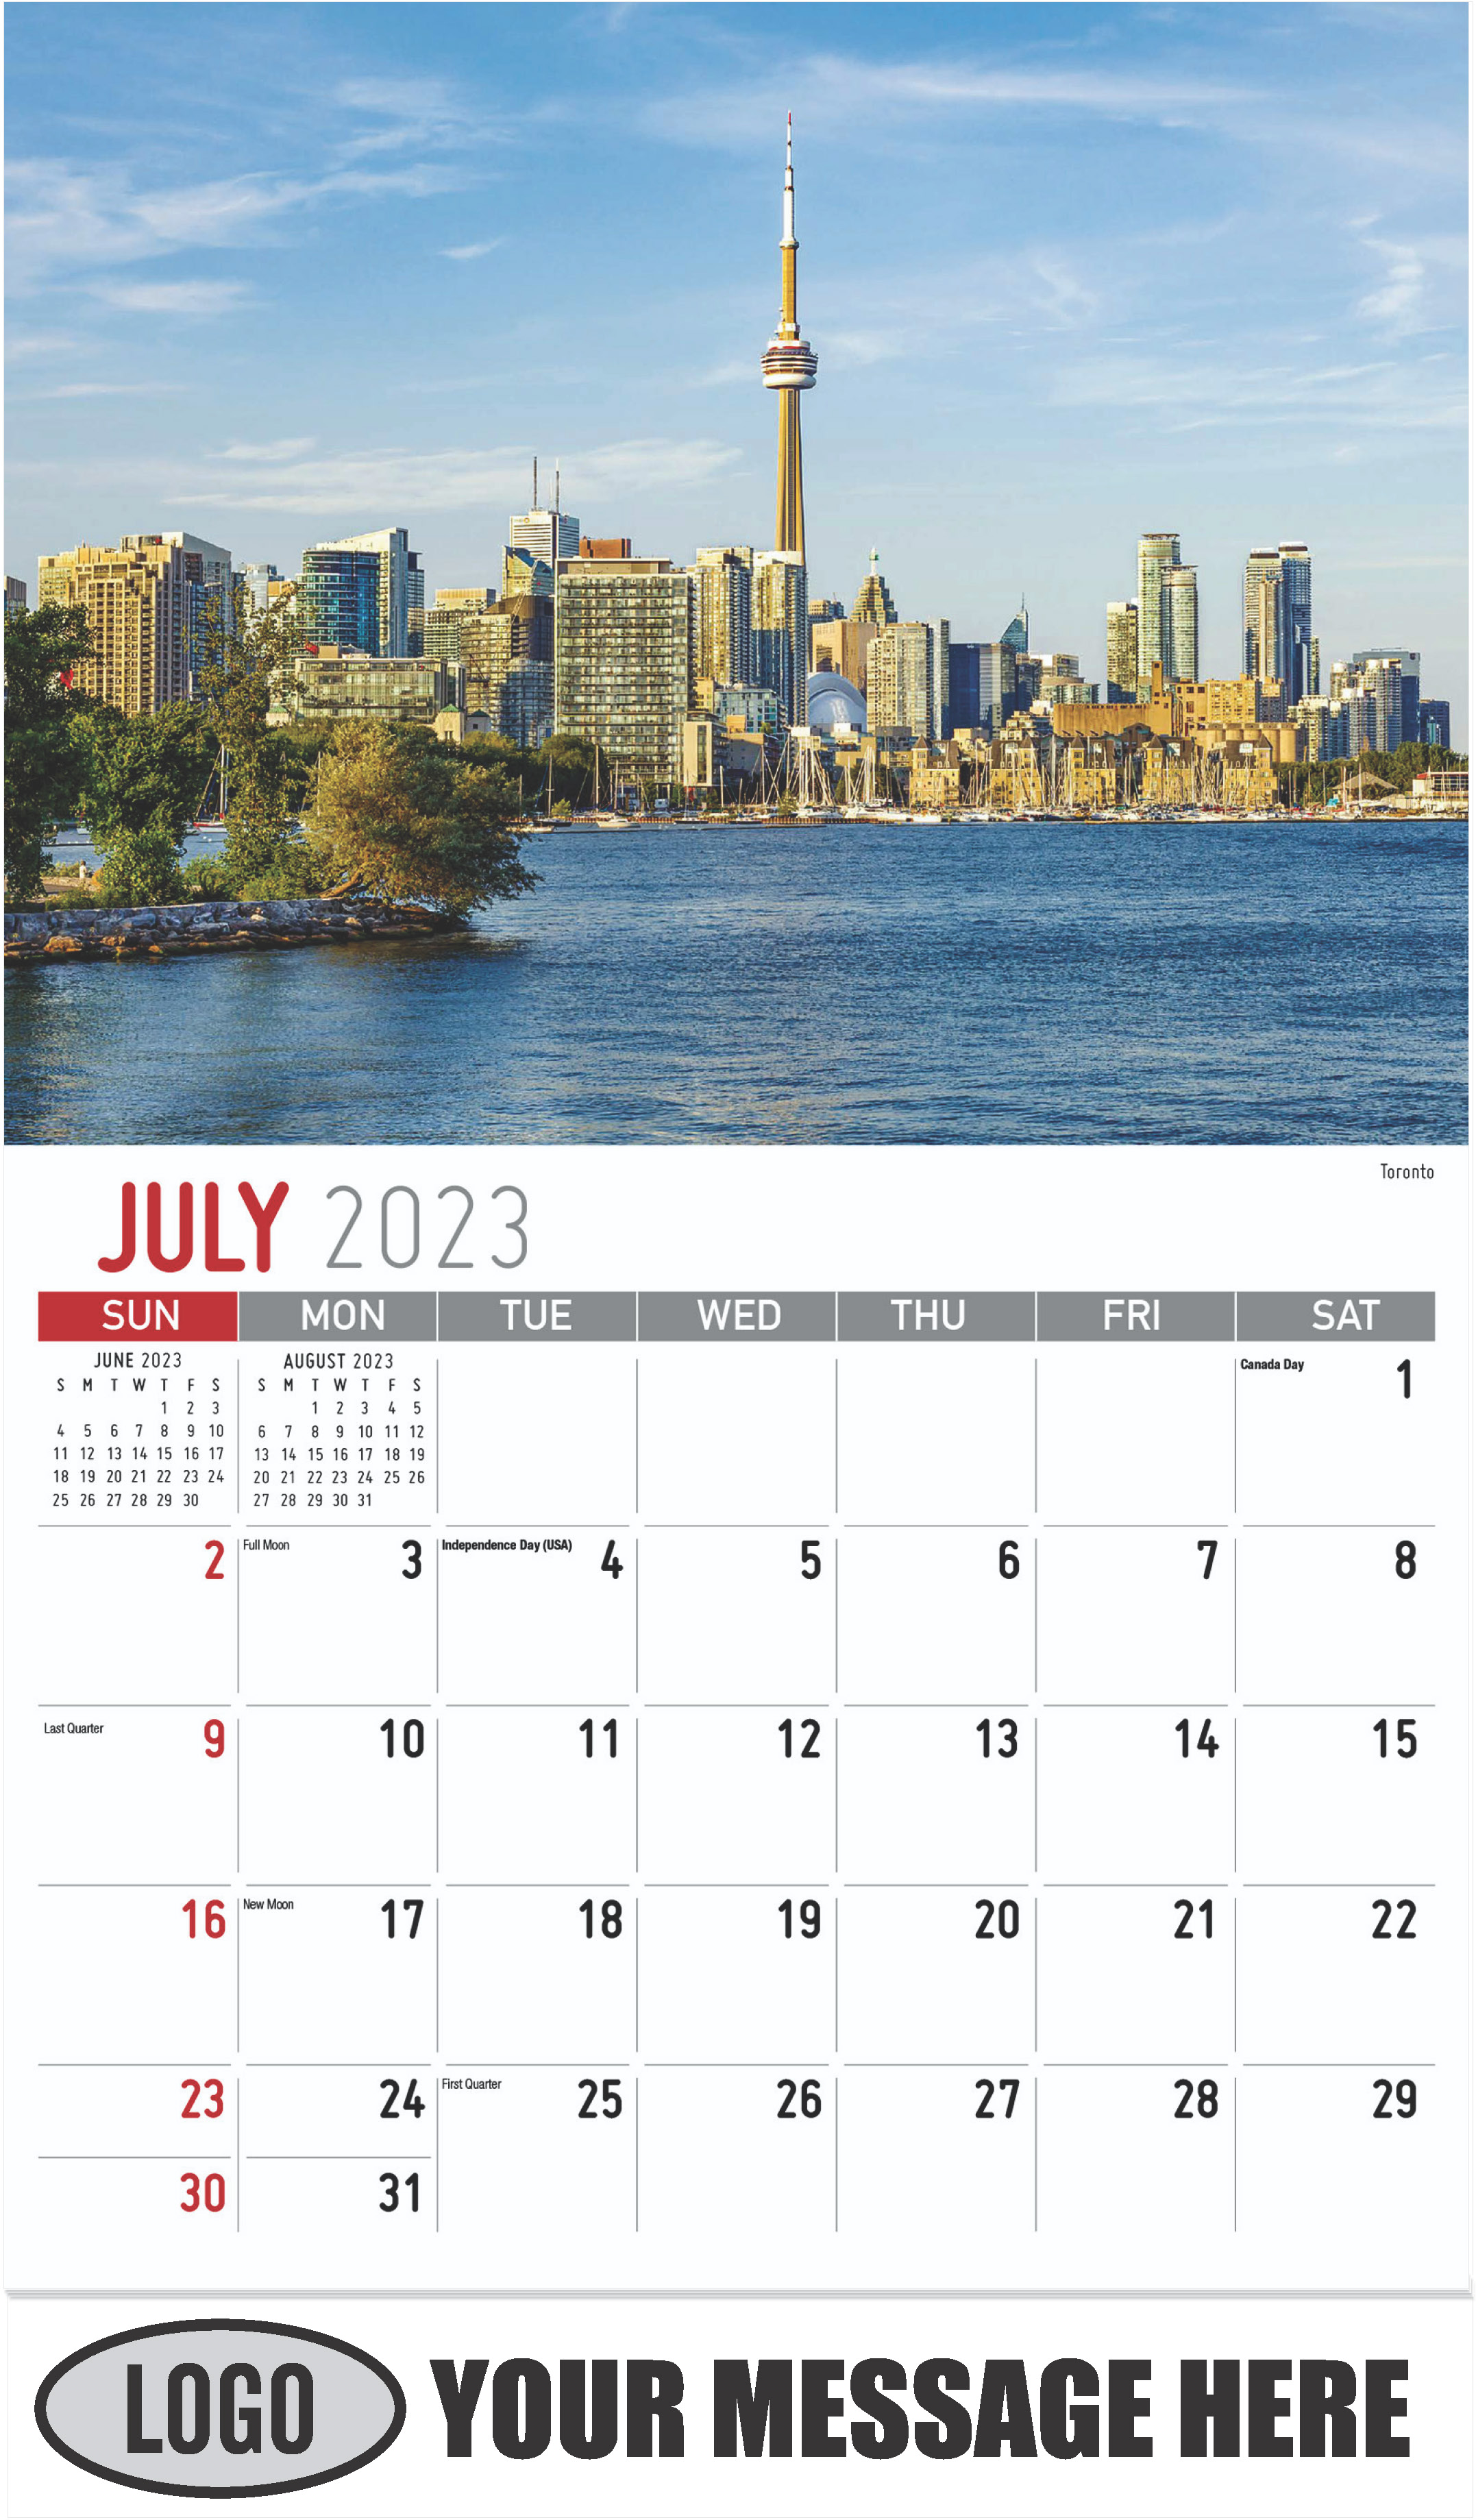 Toronto - July - Scenes of Ontario 2023 Promotional Calendar